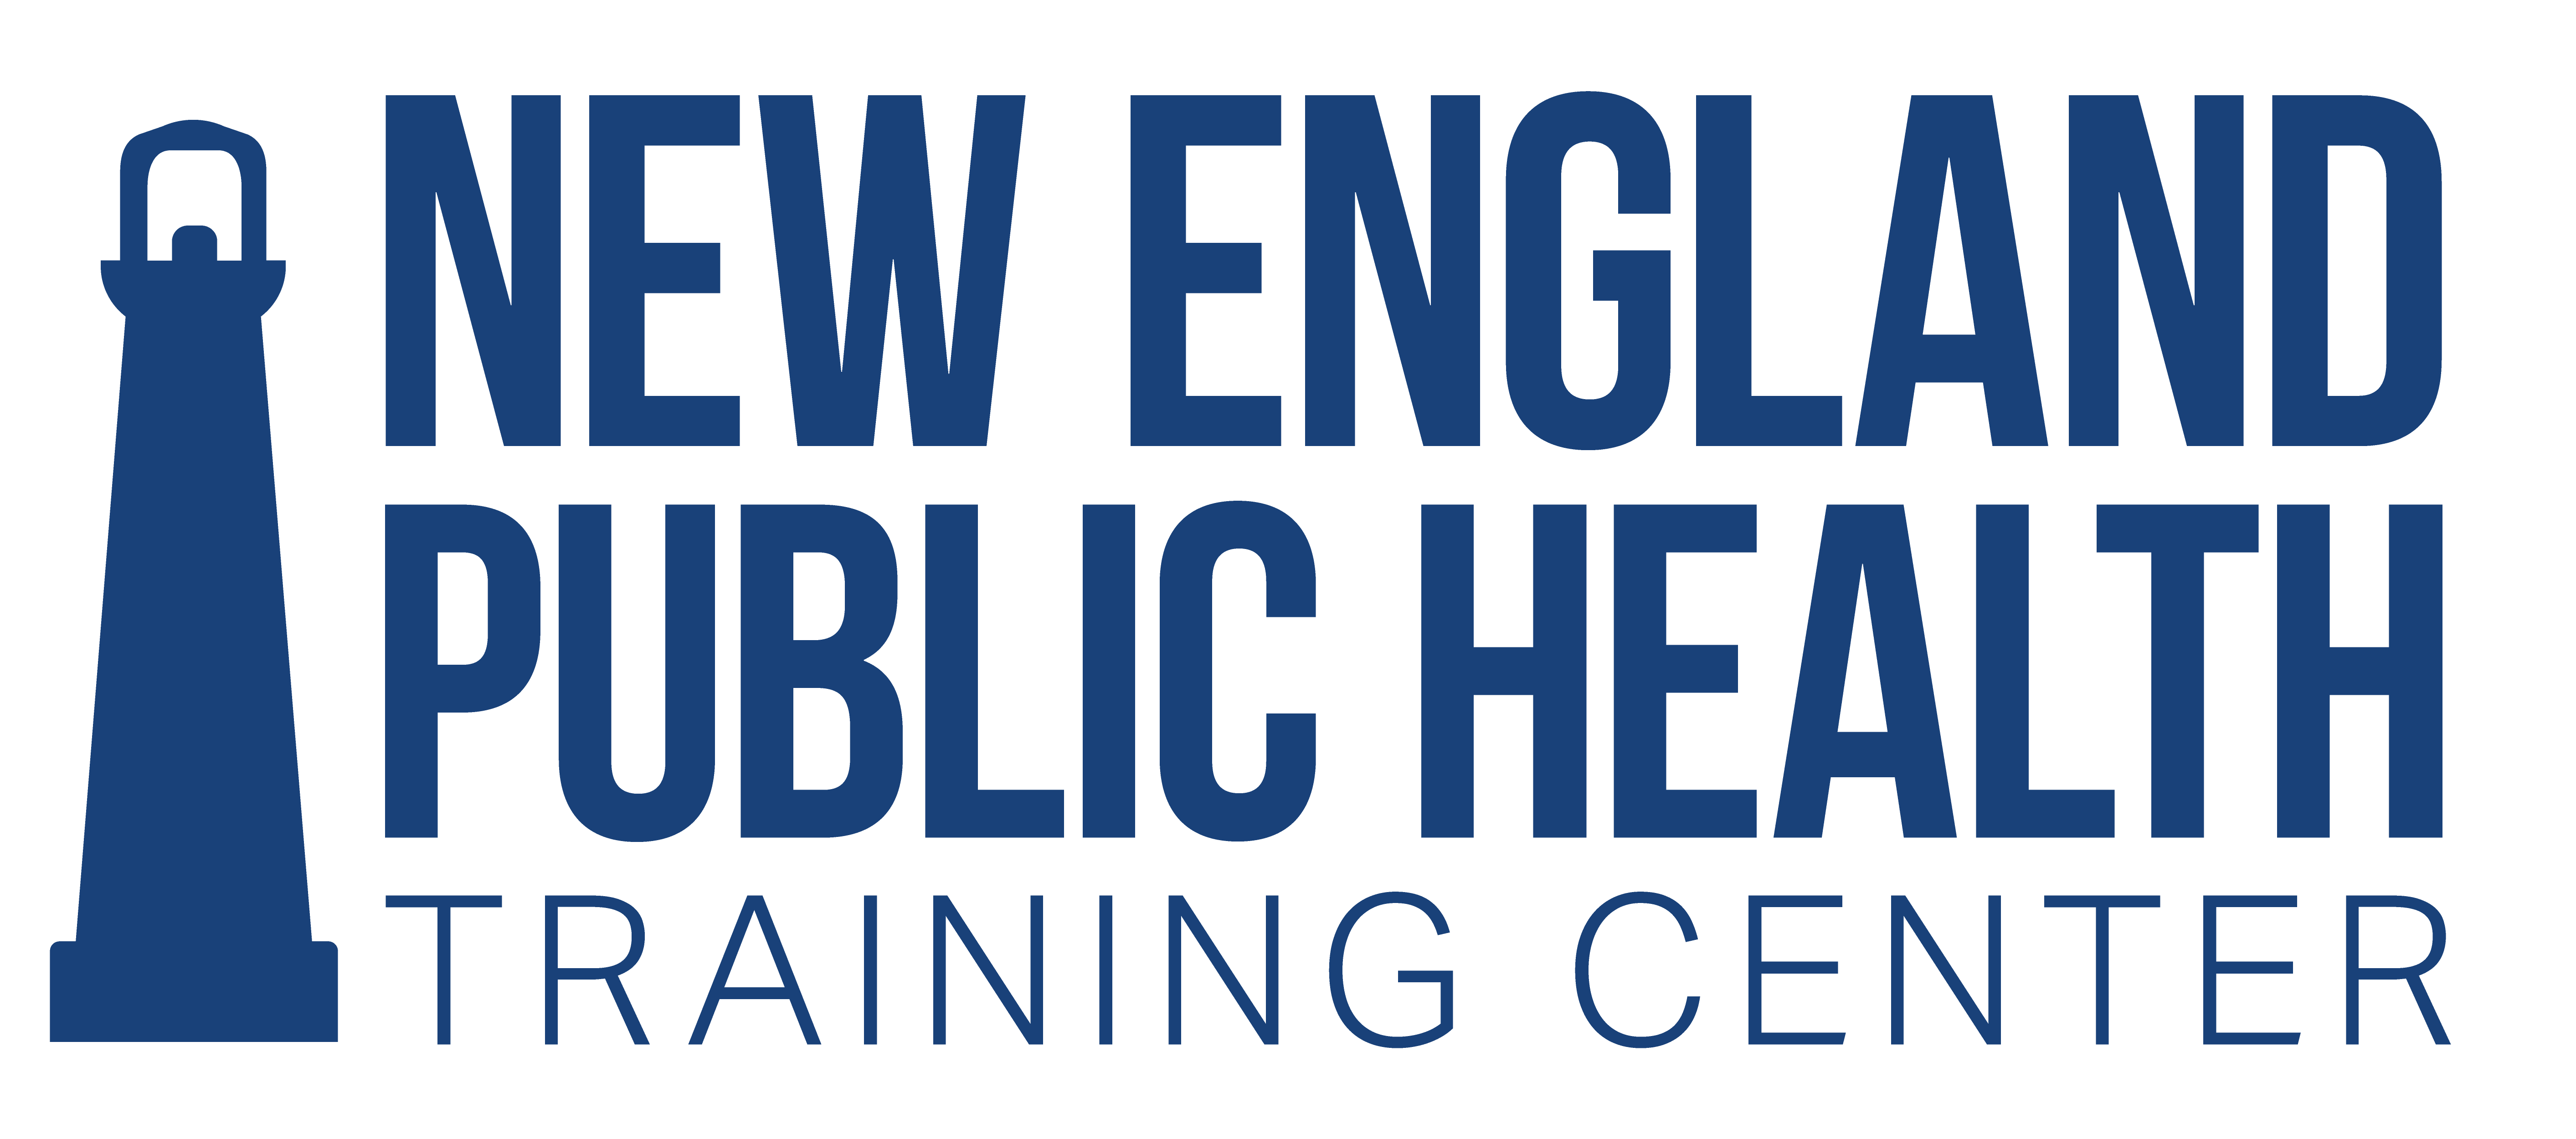 New England Public Health Association logo NEPHTC